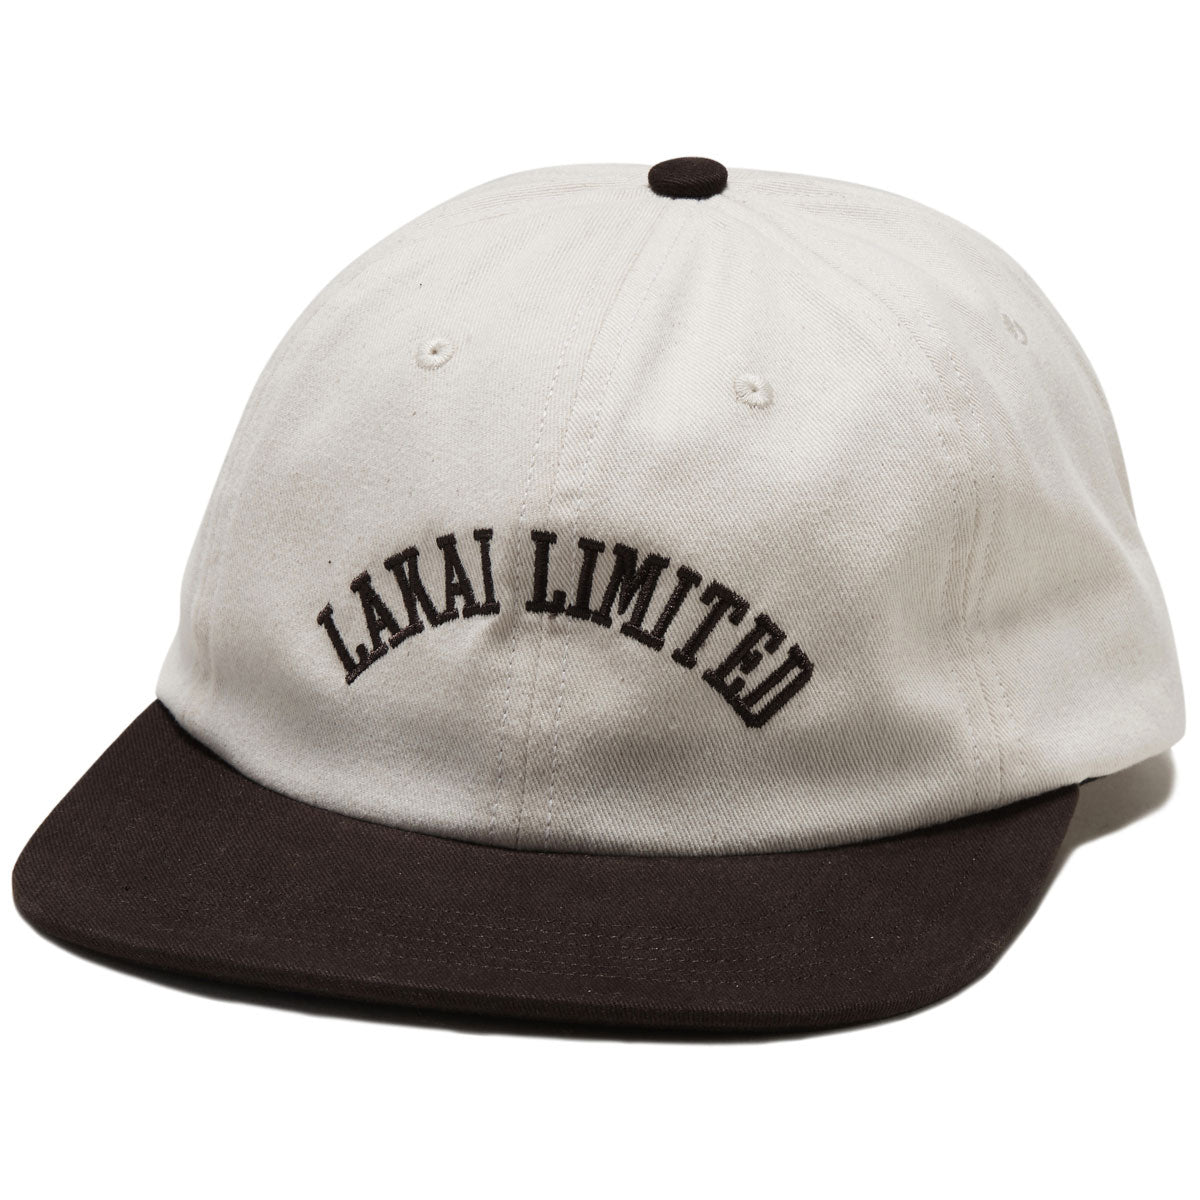 Lakai Arch Polo Hat - Brown/Tan image 1